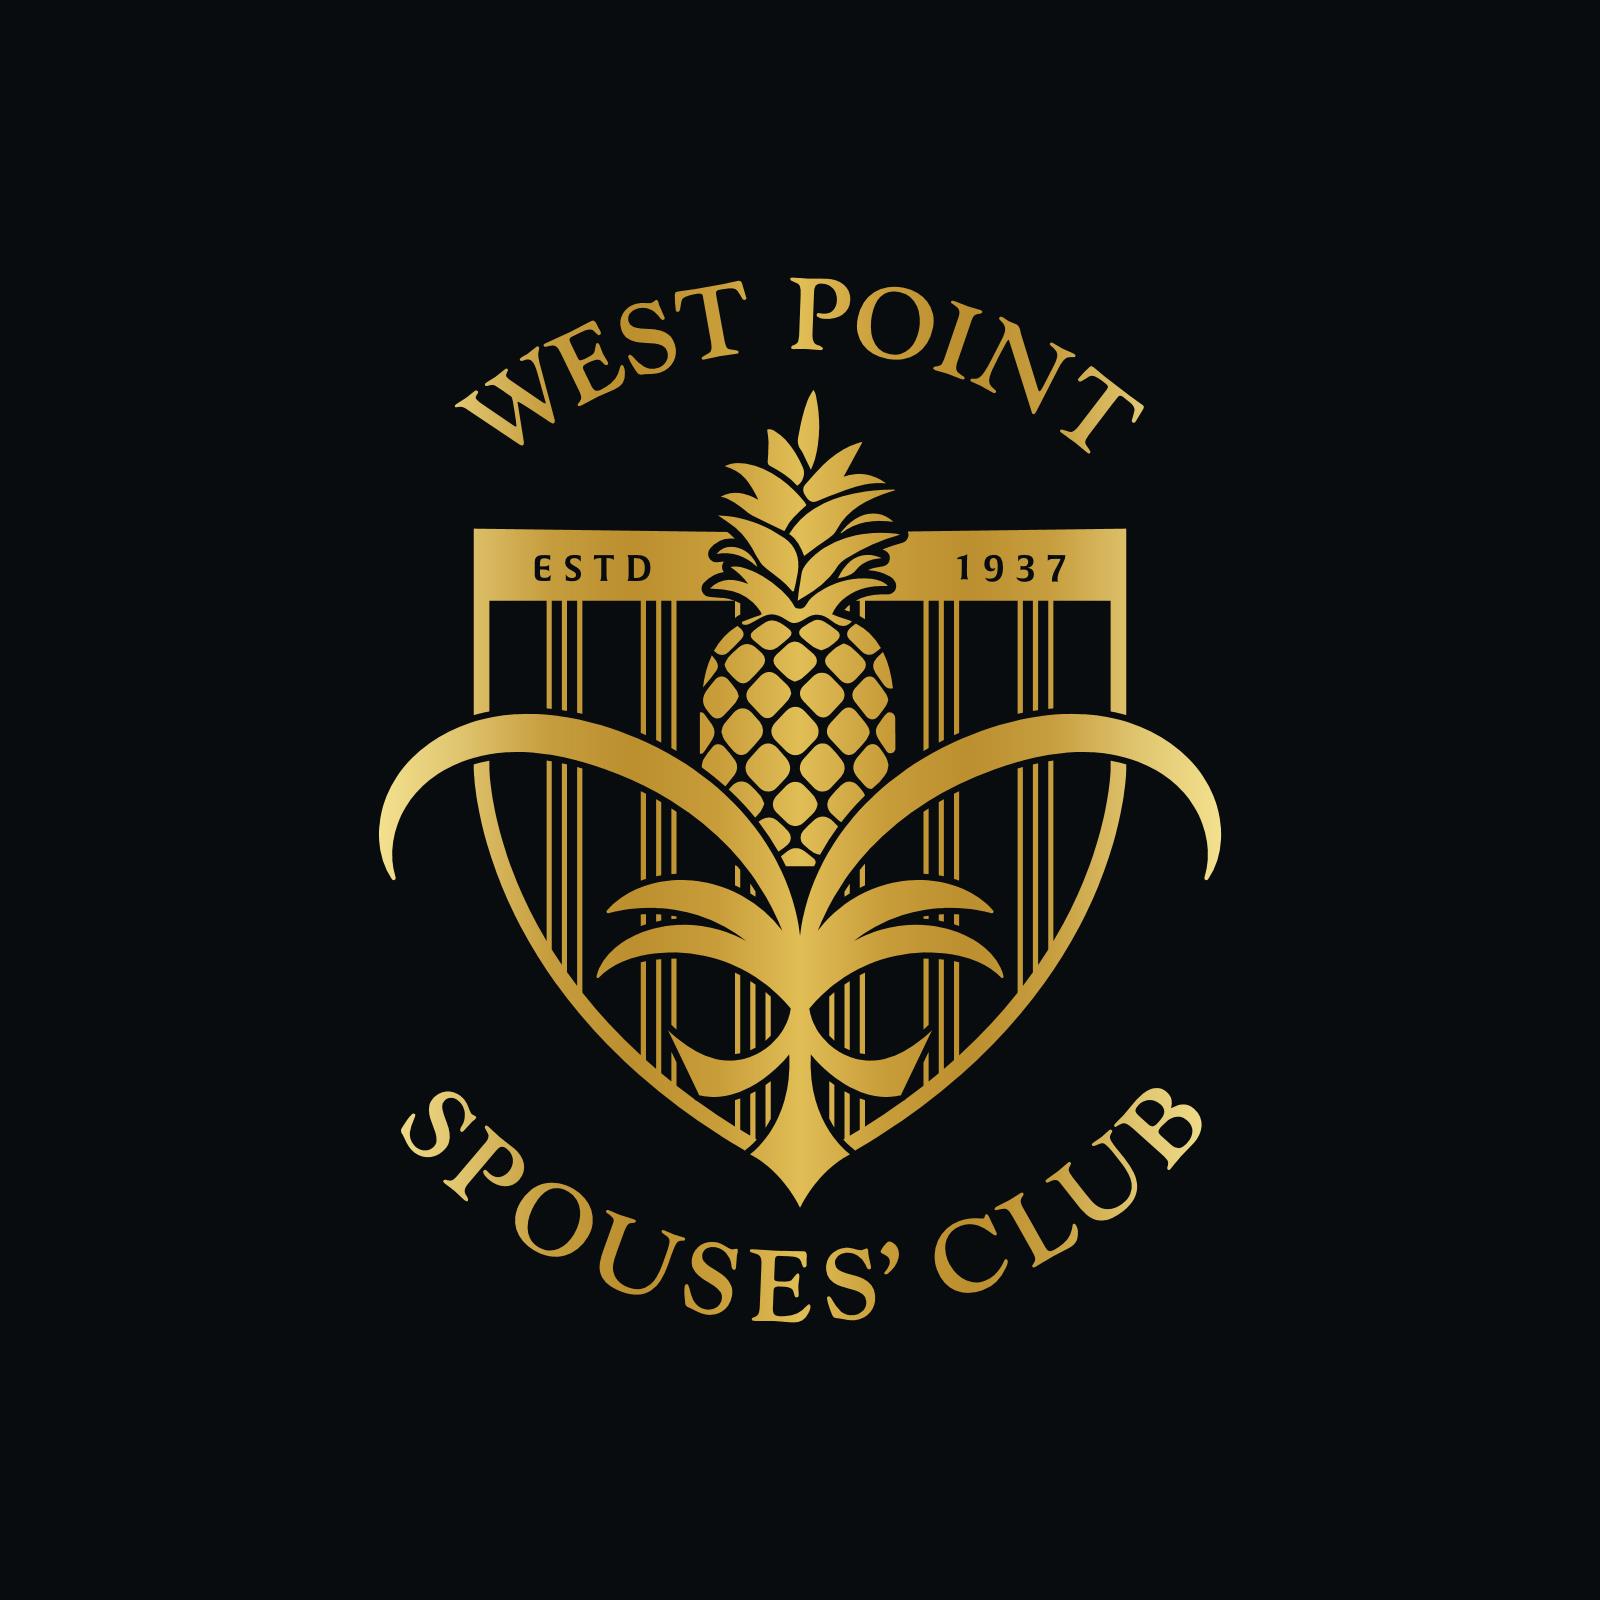 West Point Spouses Club